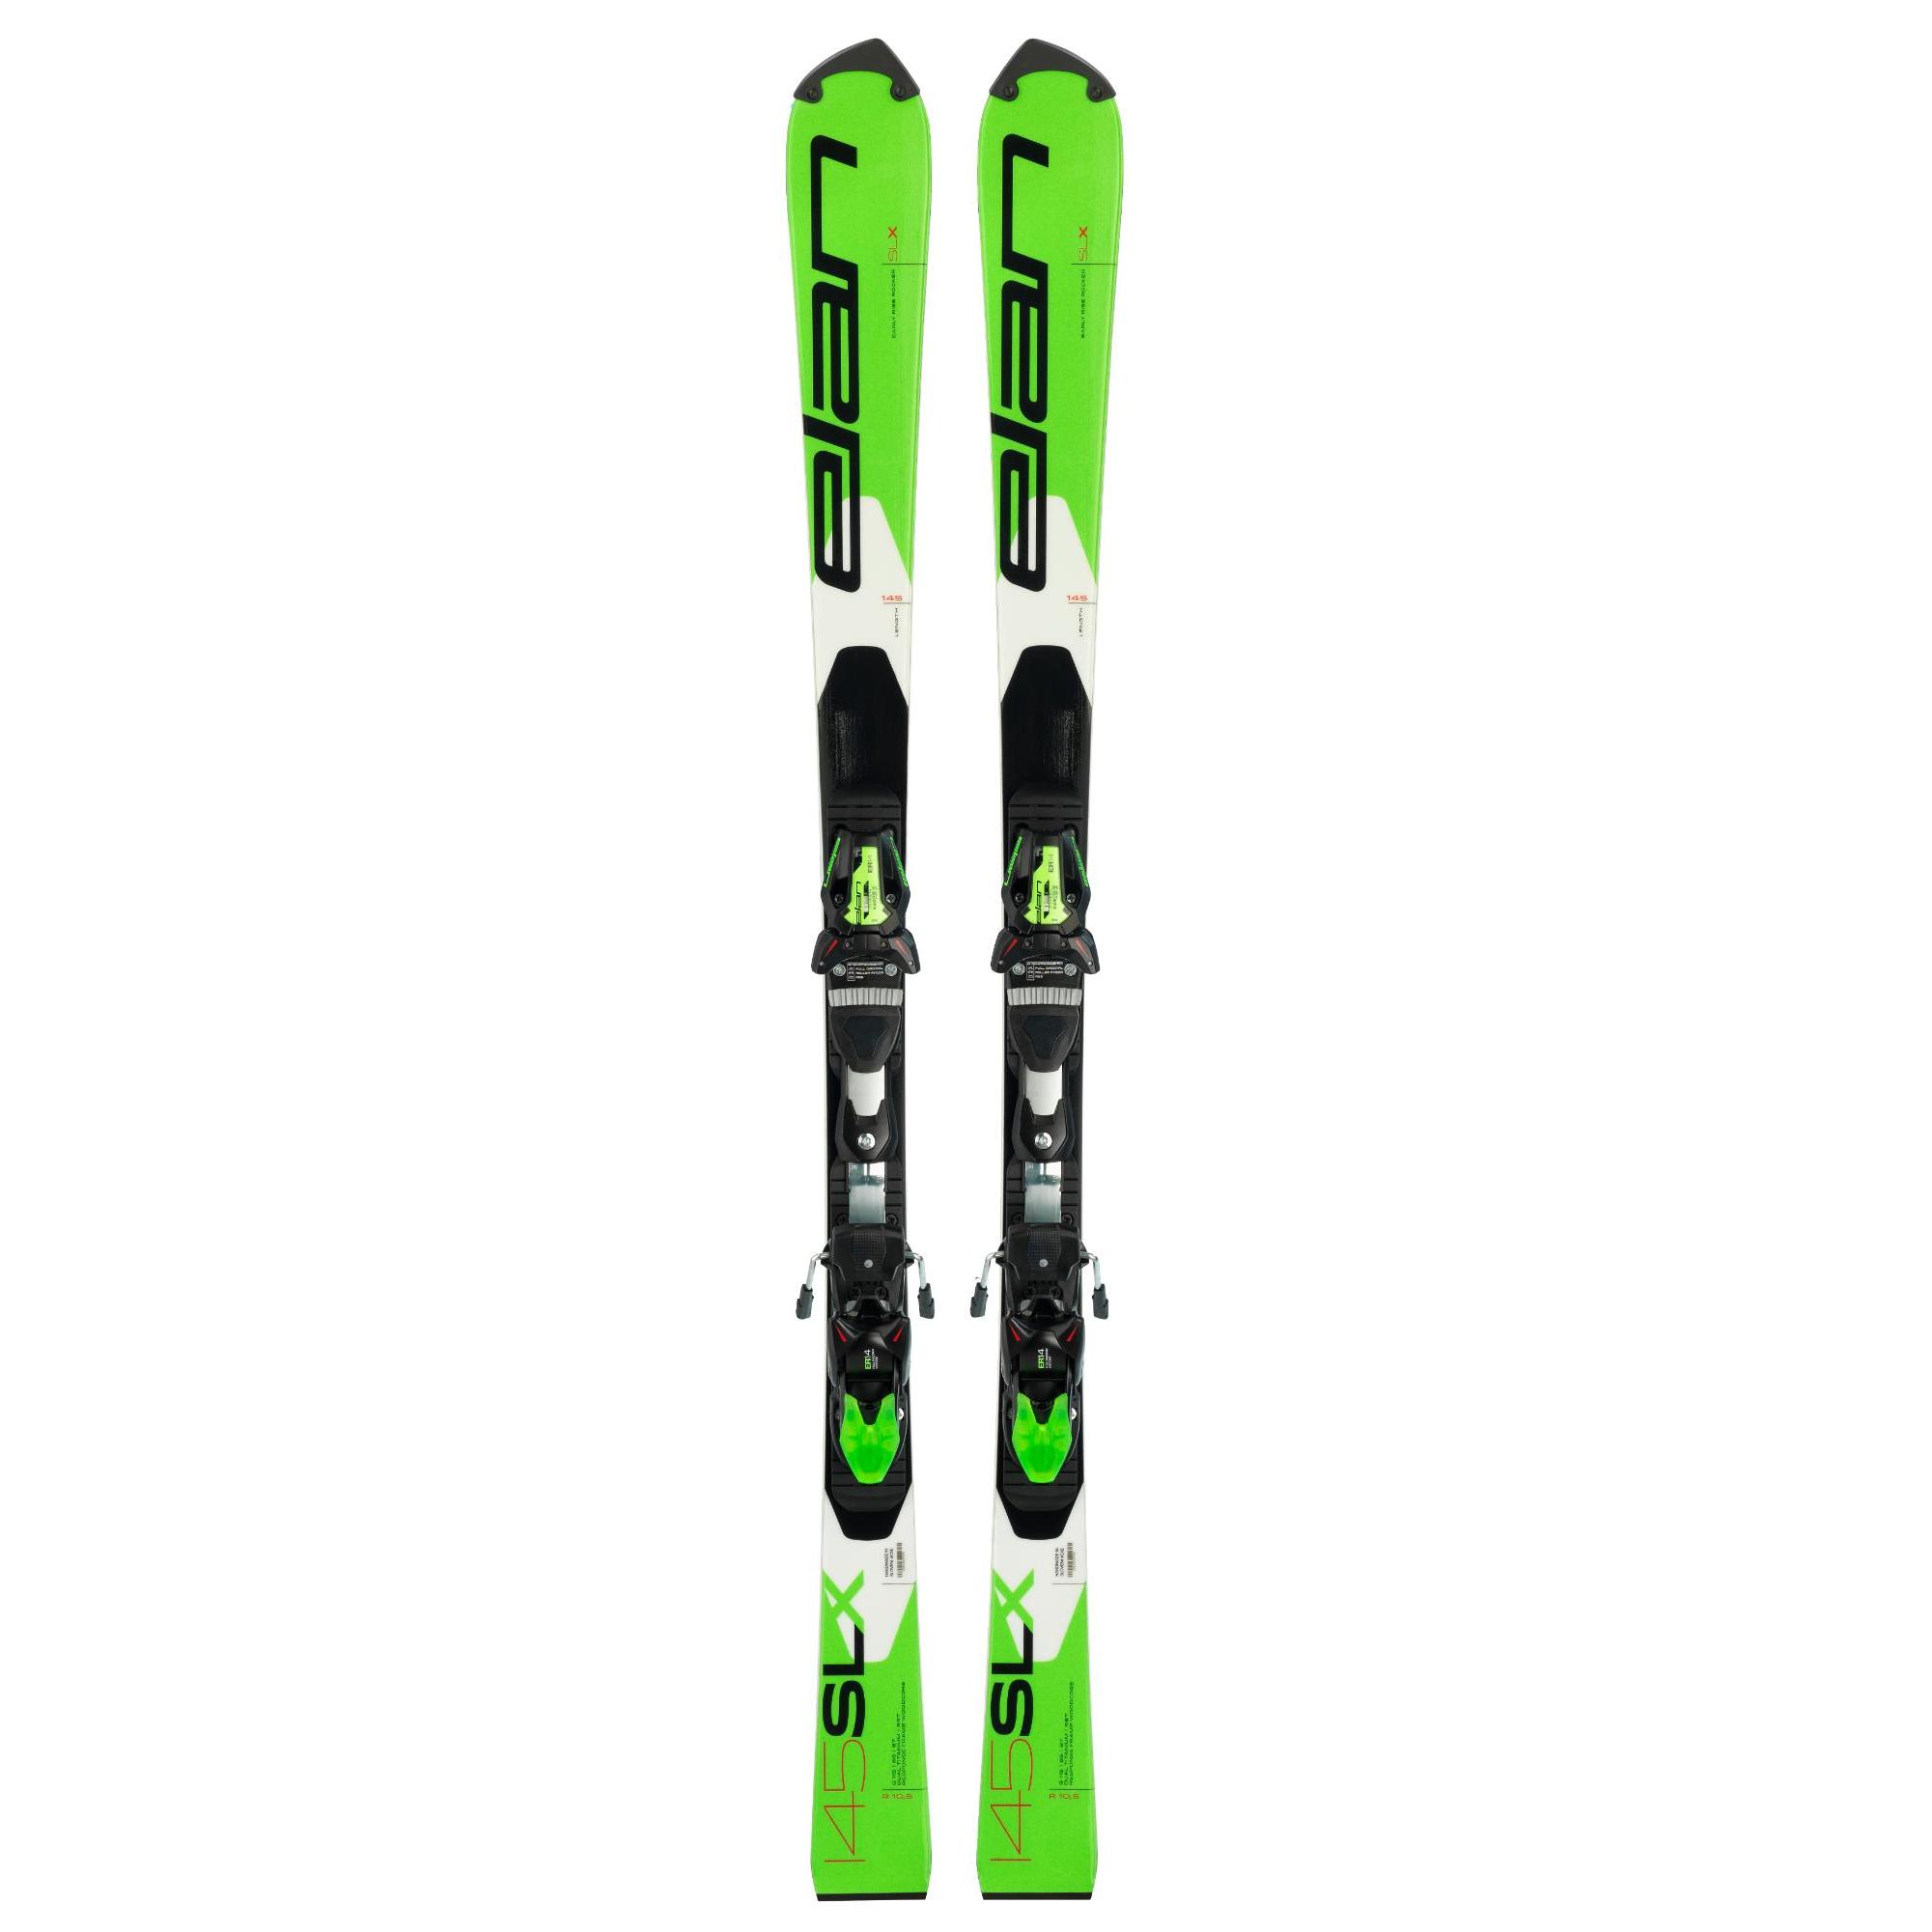 Горные лыжи Elan Slx Team Plate 2019, зеленые, 139 см